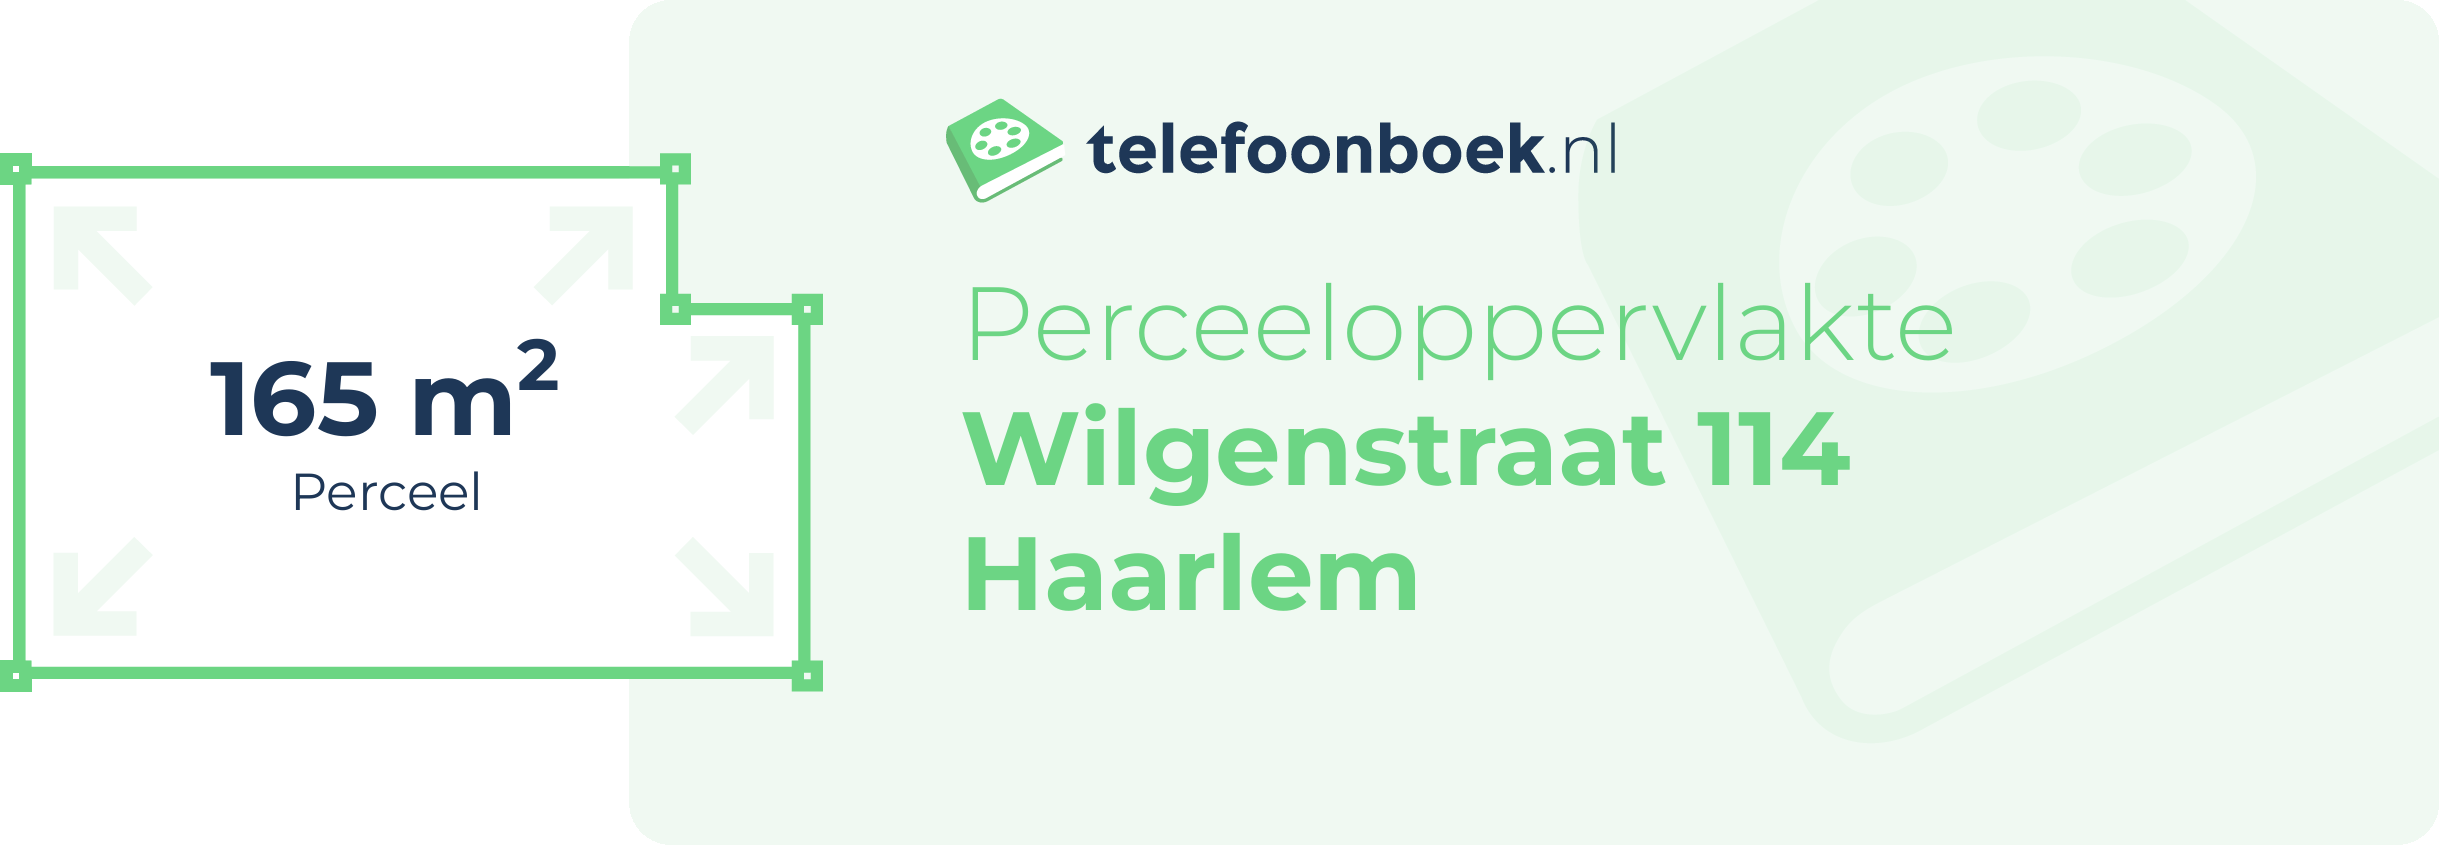 Perceeloppervlakte Wilgenstraat 114 Haarlem